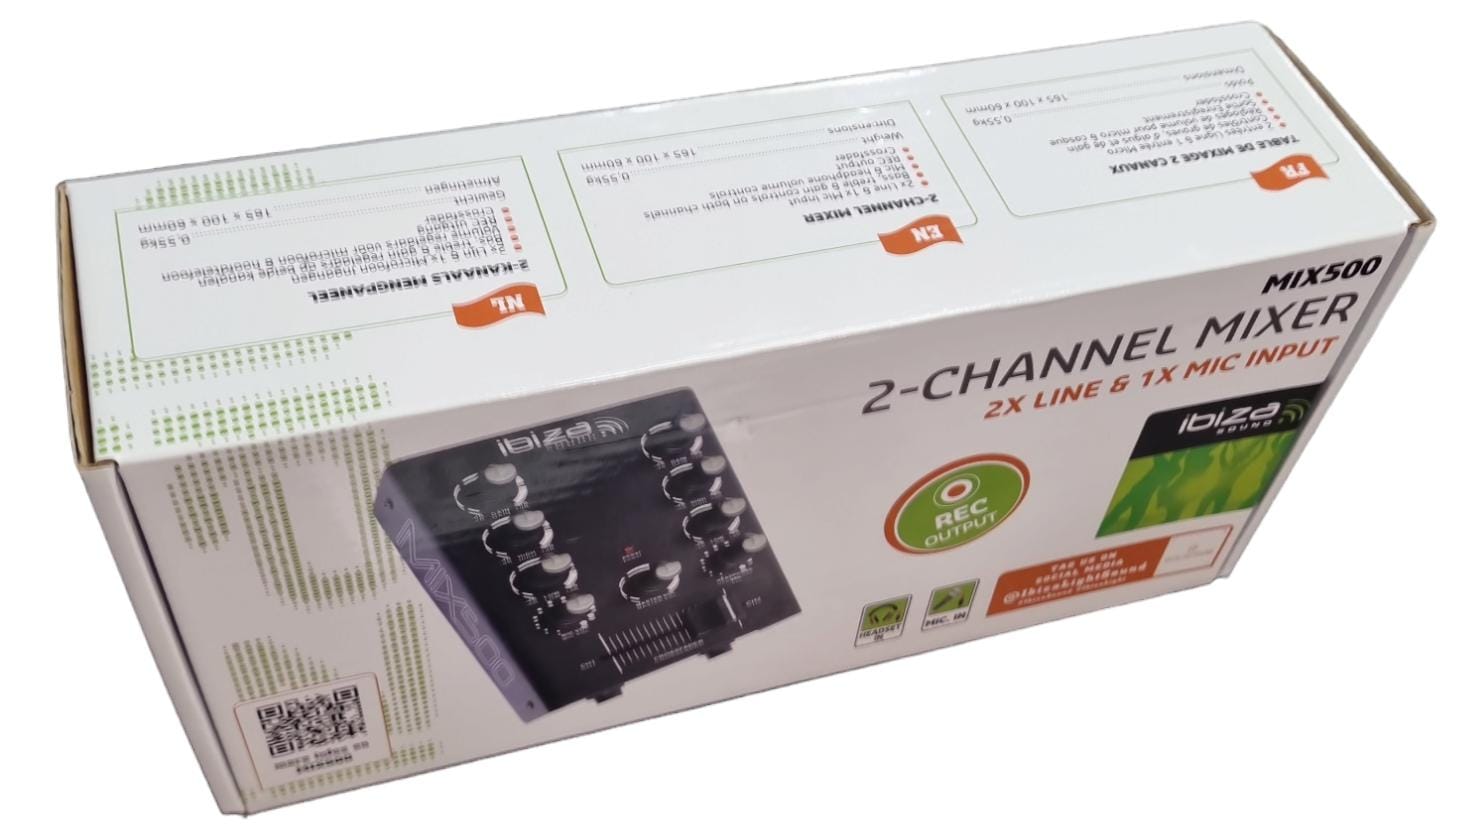 Ibiza Sound - MIX500 - 2 Channel Mixer - Boxed